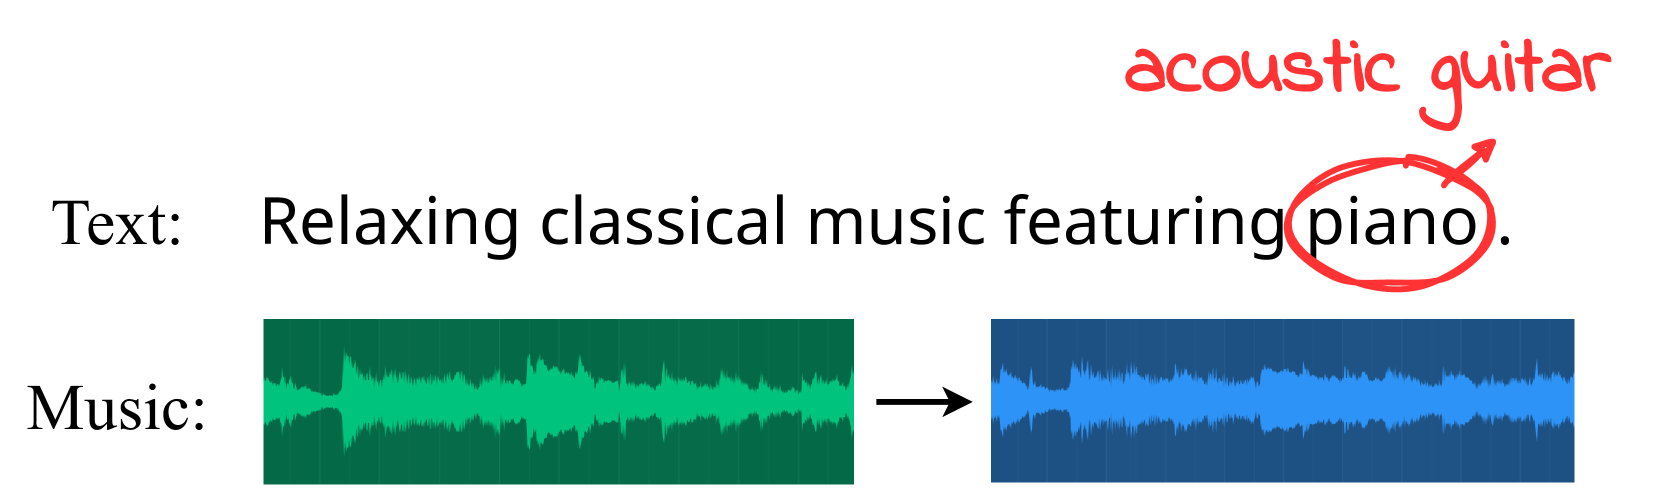 MusicMagus: Zero-Shot Text-to-Music Editing via Diffusion Models